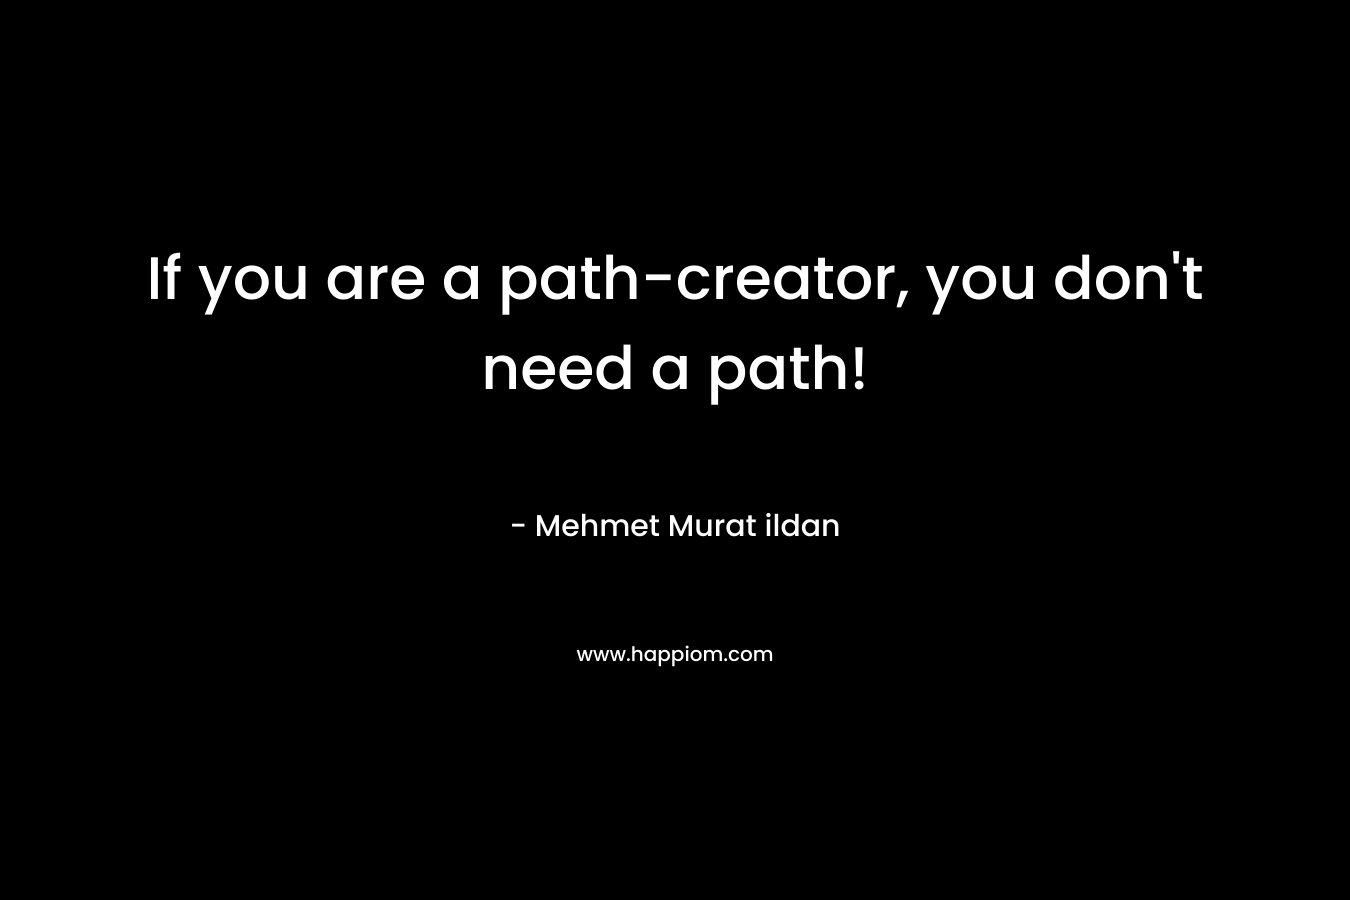 If you are a path-creator, you don’t need a path! – Mehmet Murat ildan